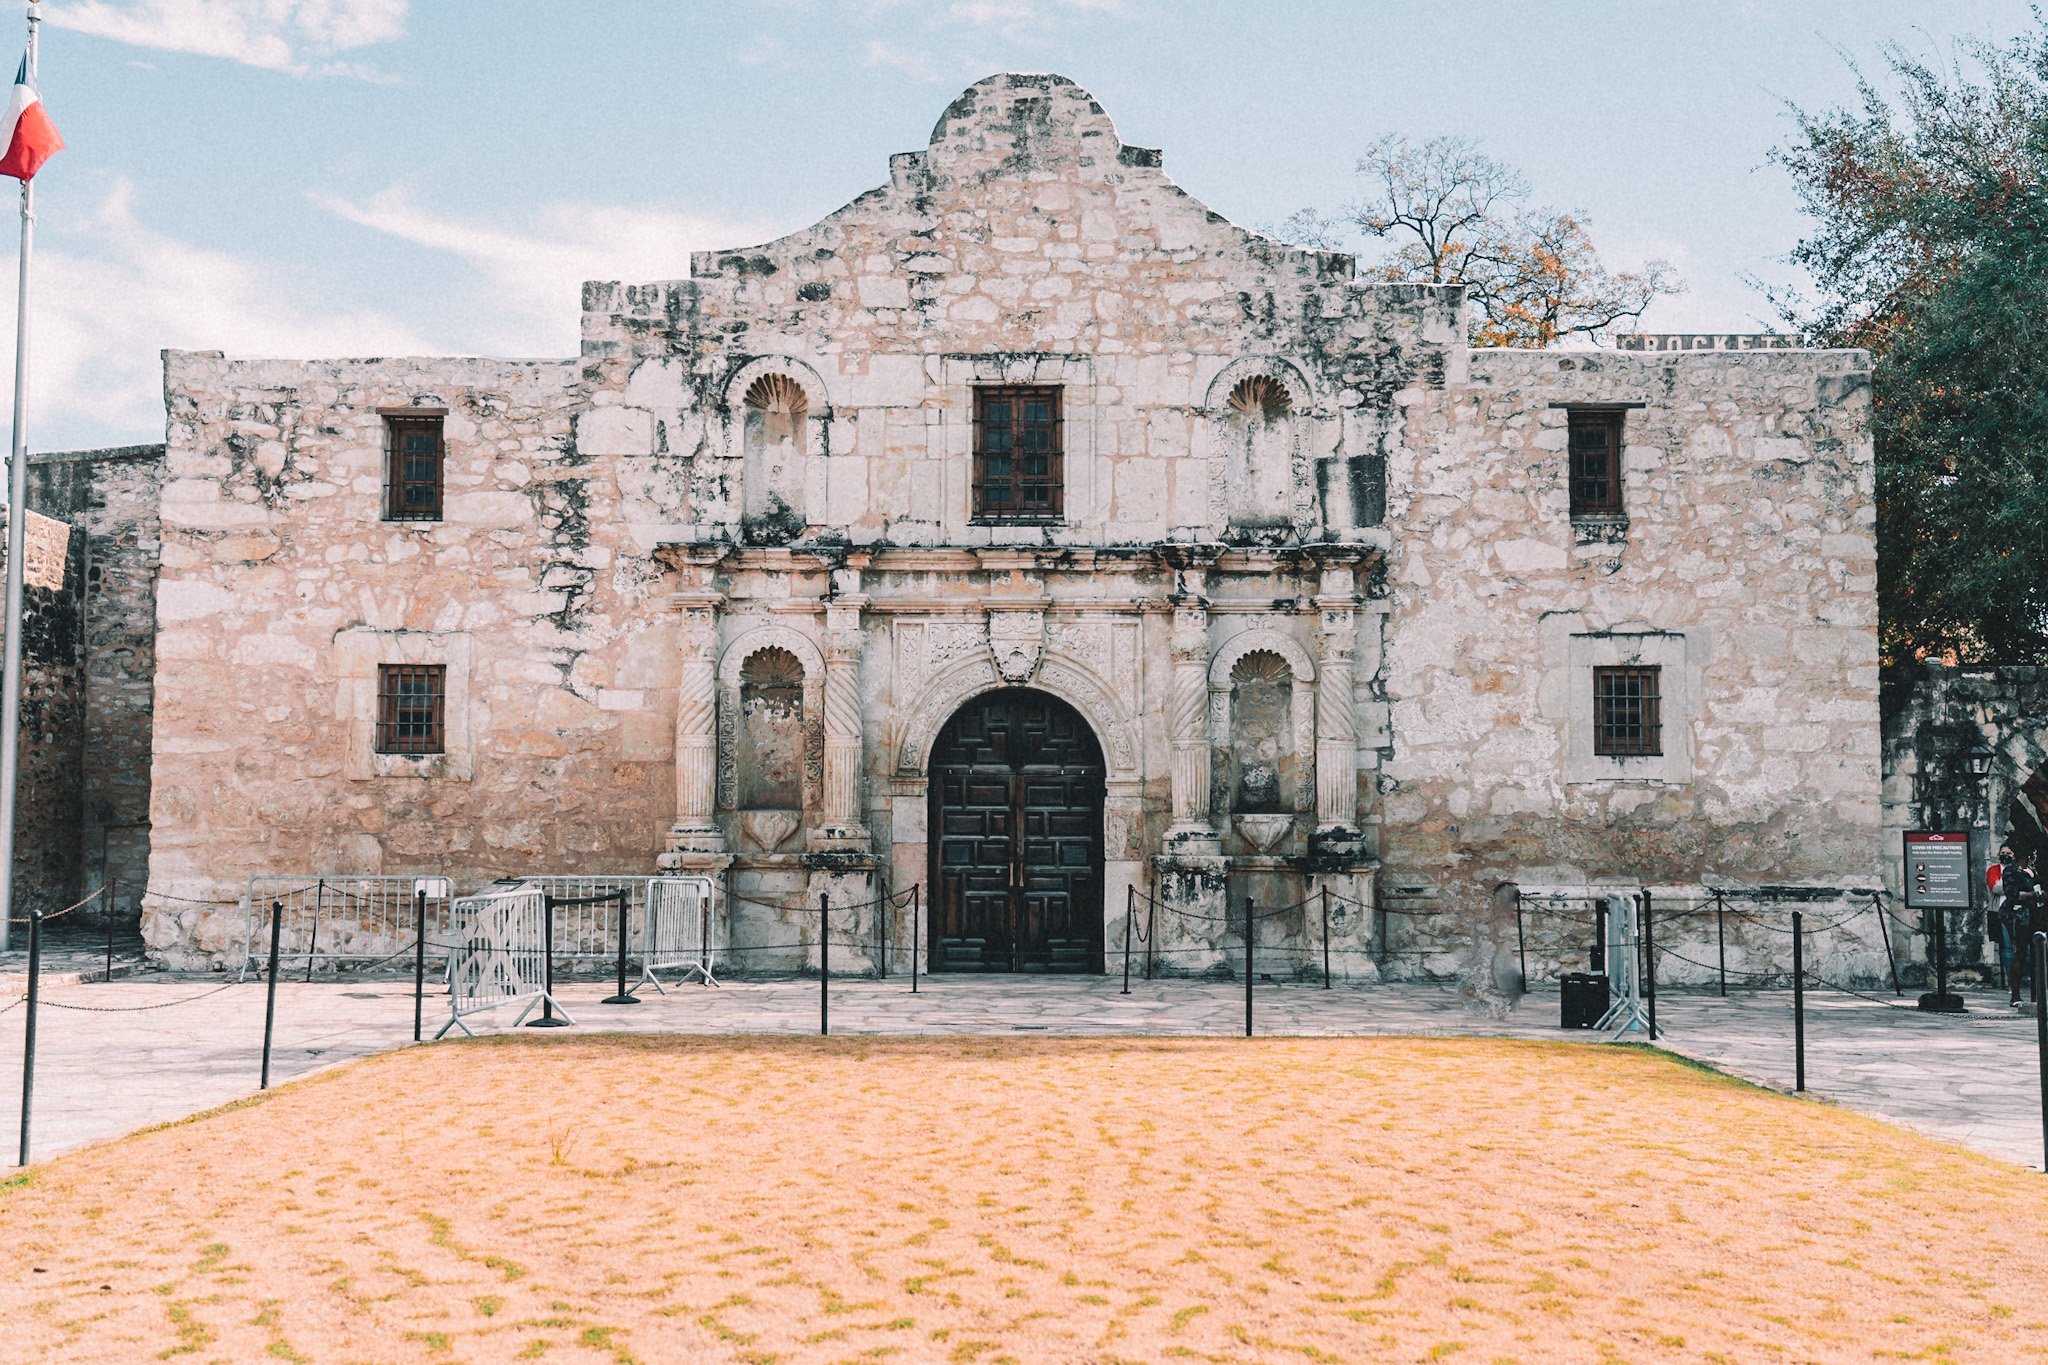 The Alamo in San Antonio Texas by Annie Miller